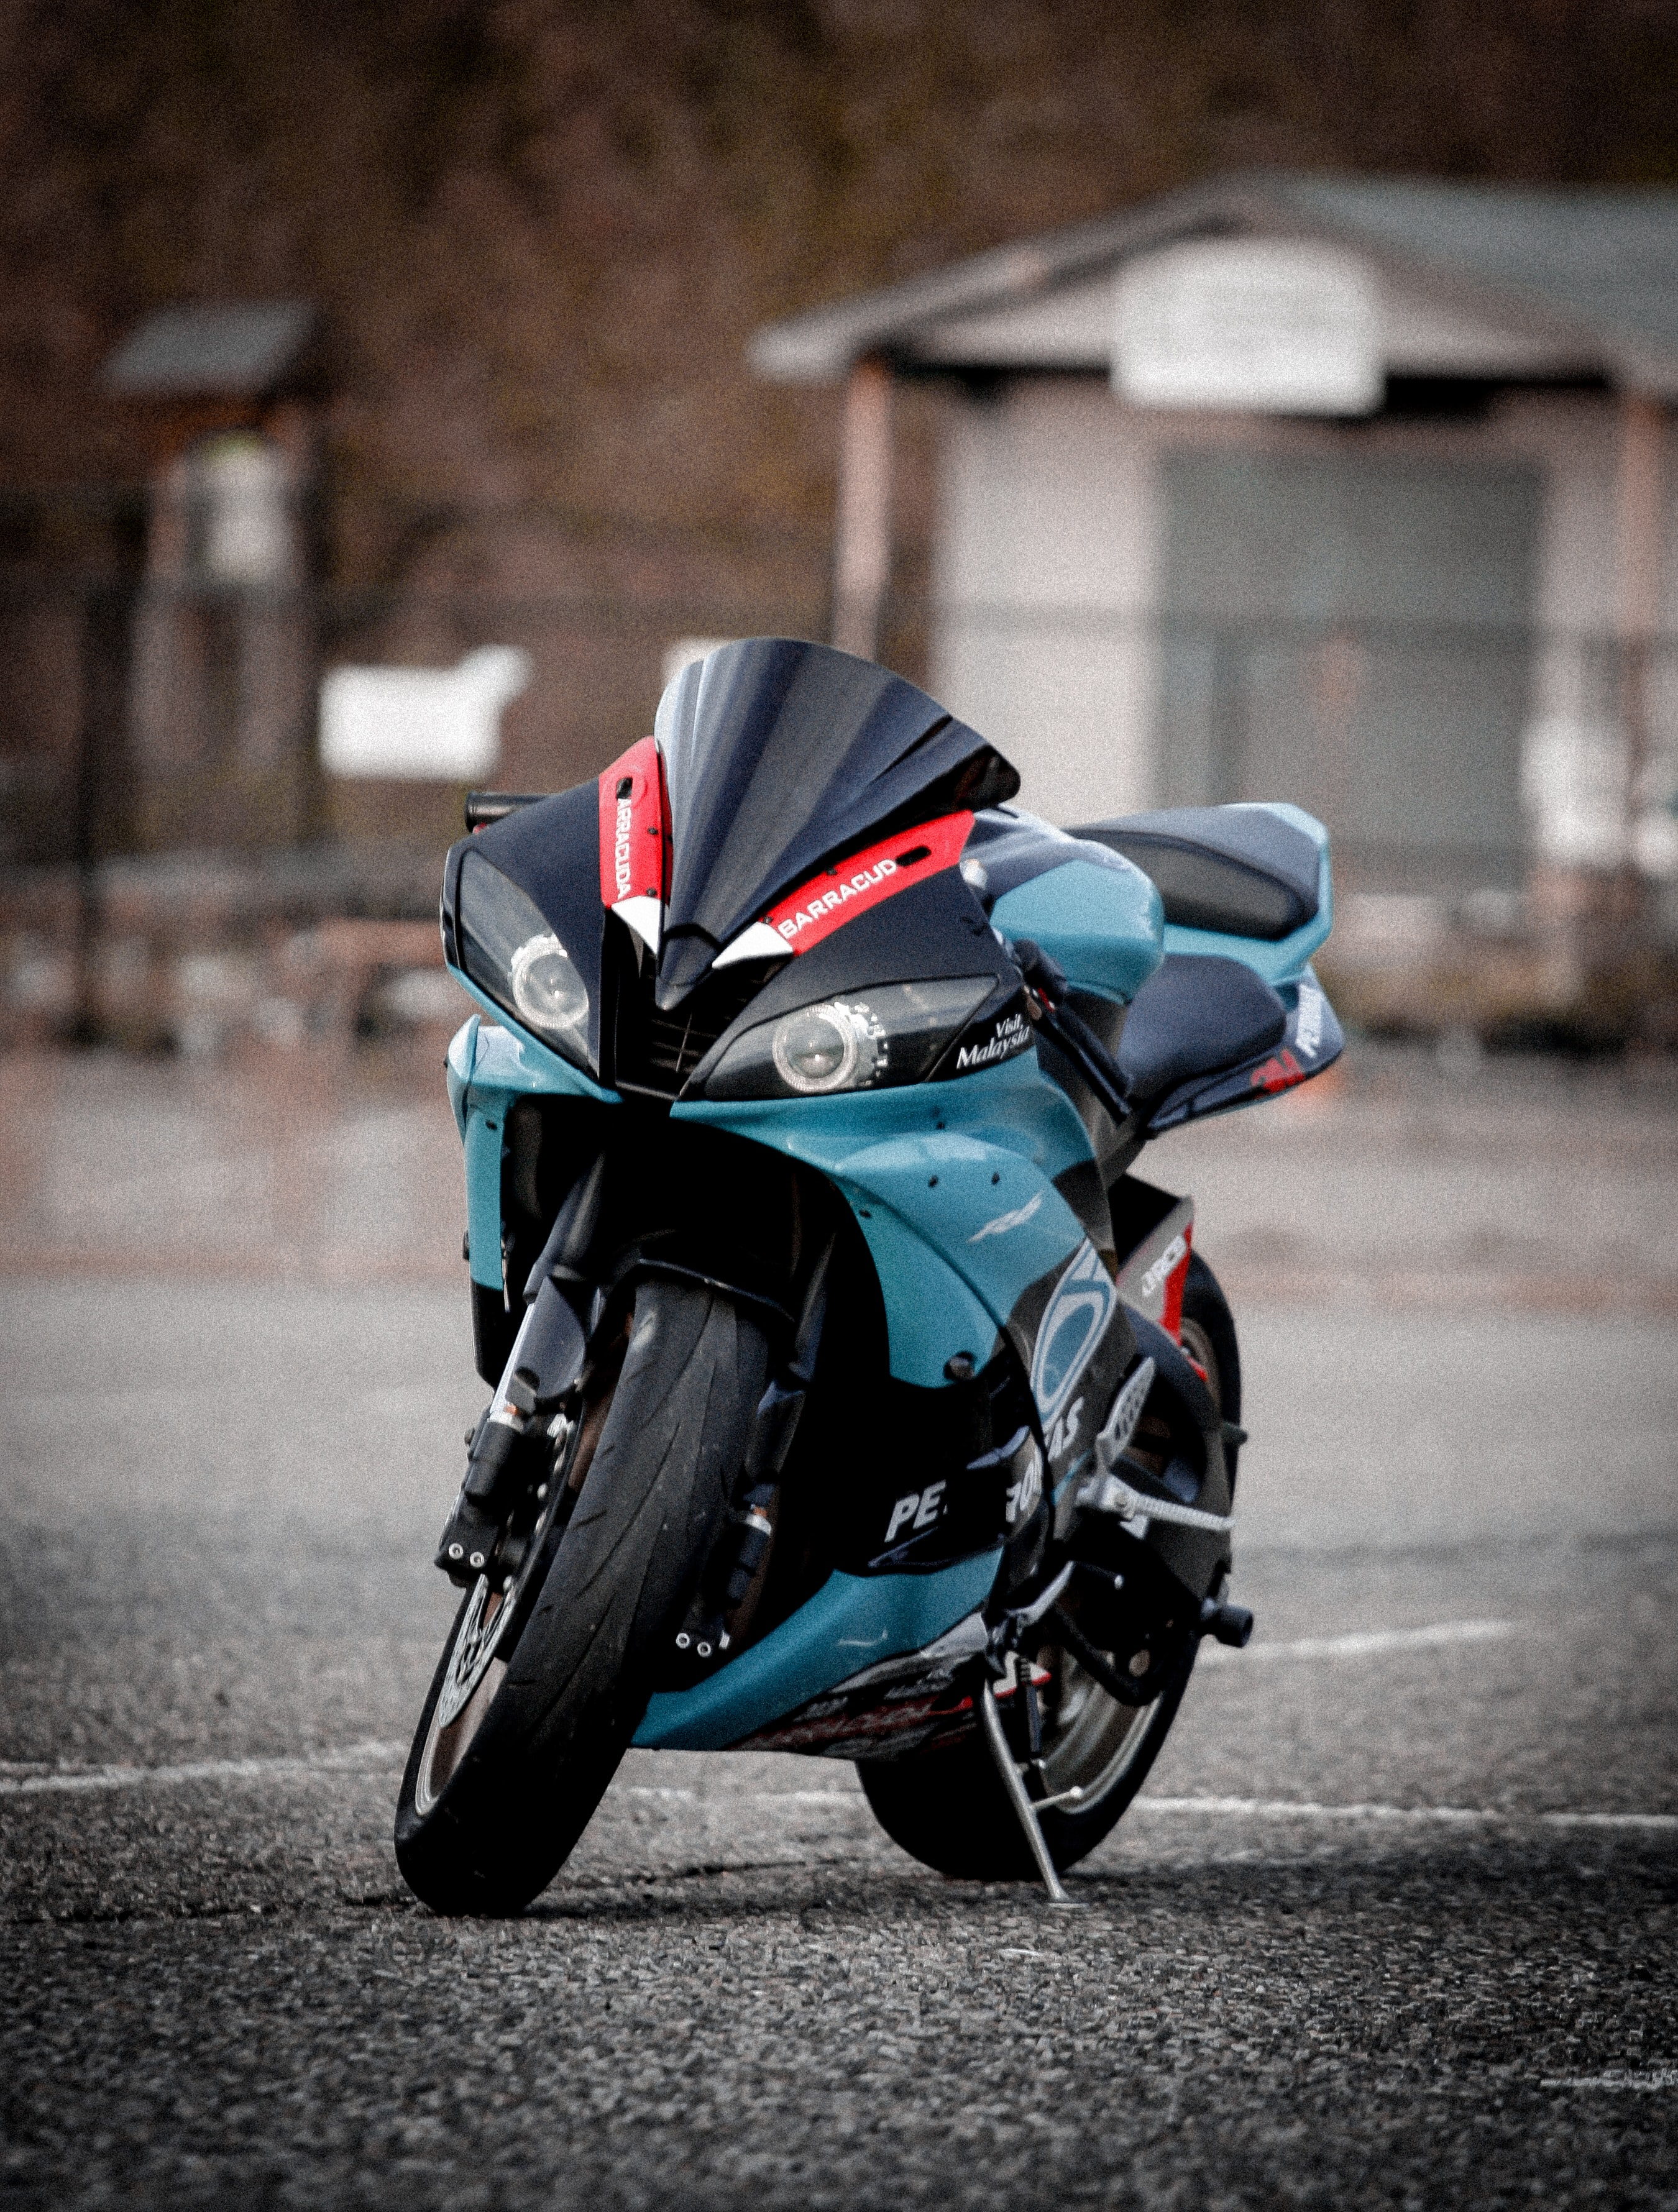 bike, motorcycles, motorcycle, sport bike, blue, front view, sportbike